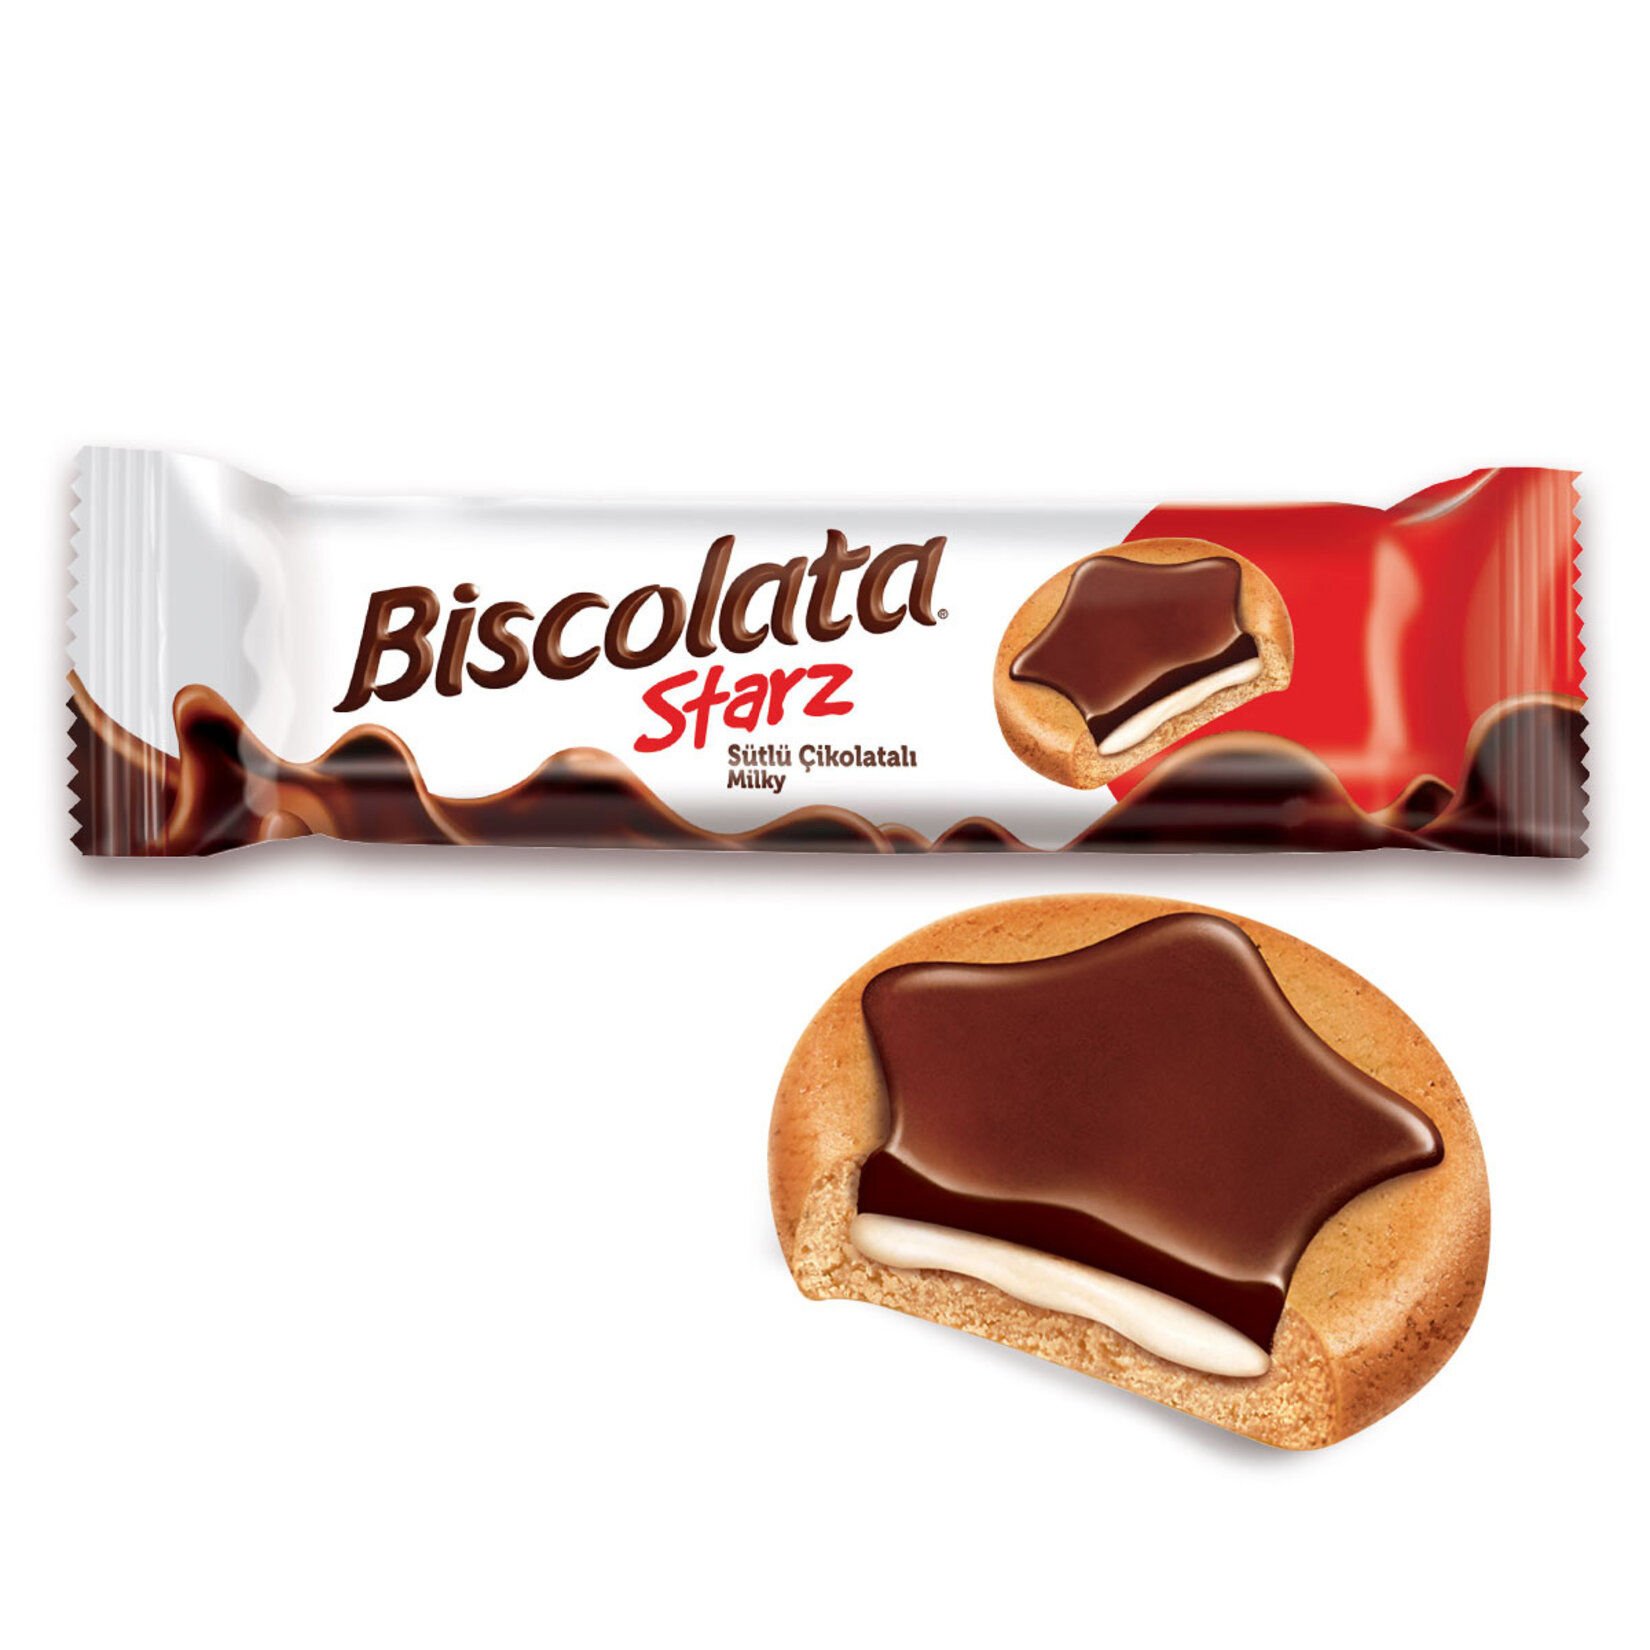 Biscolata Starz Sütlü Çikolatalı 82g